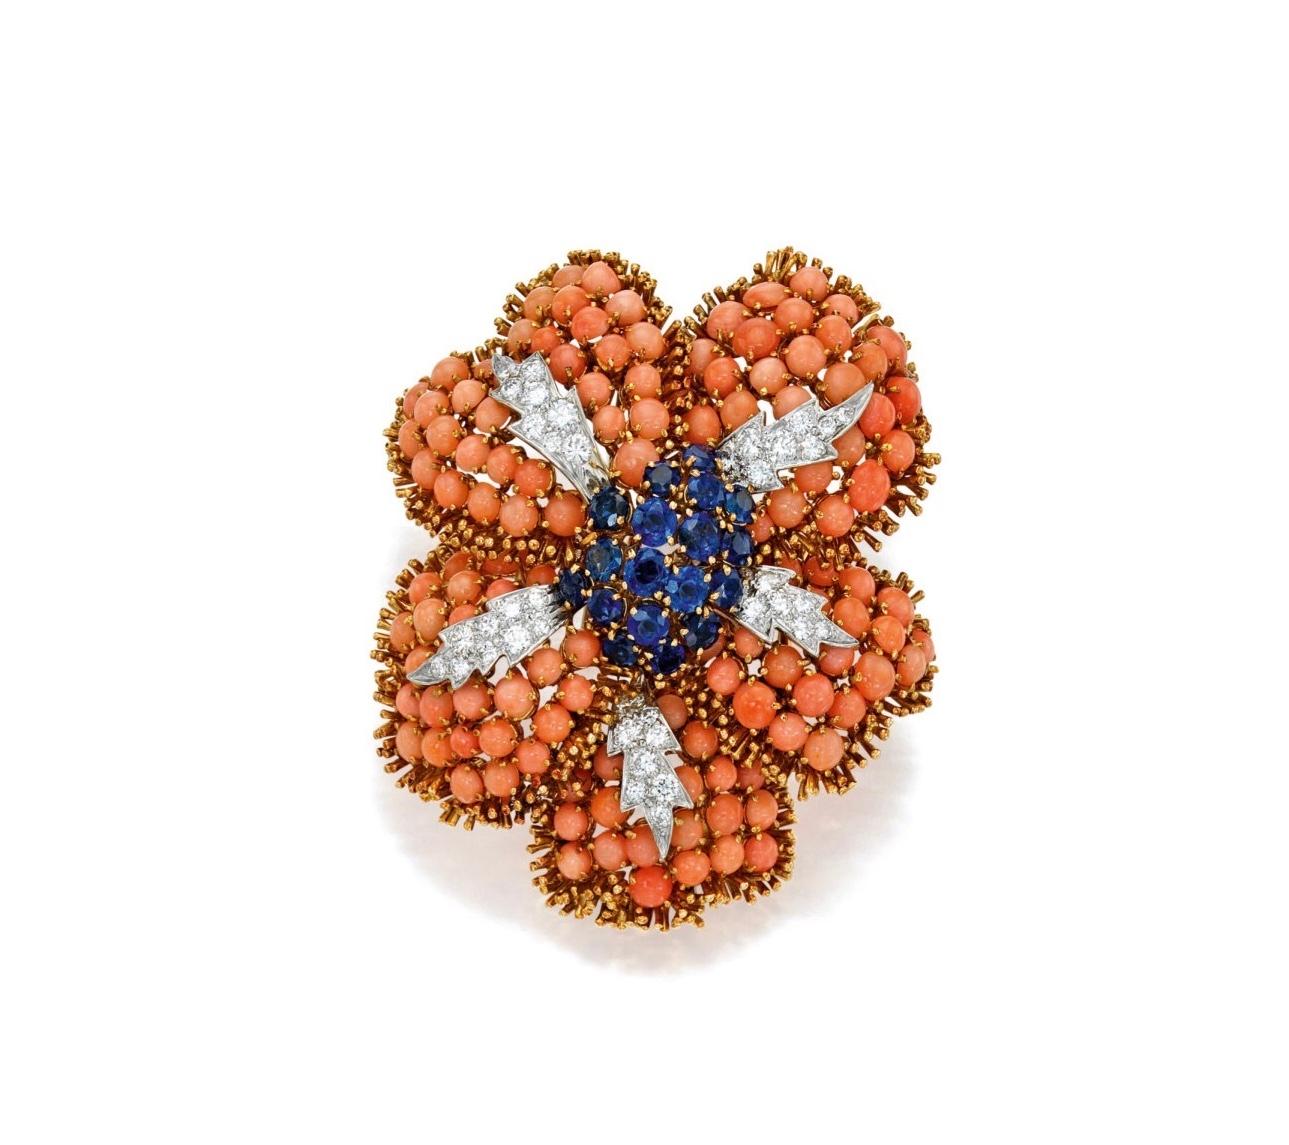 Mixed Cut David Webb Coral & Gemstone Flower Brooch-Pendant For Sale